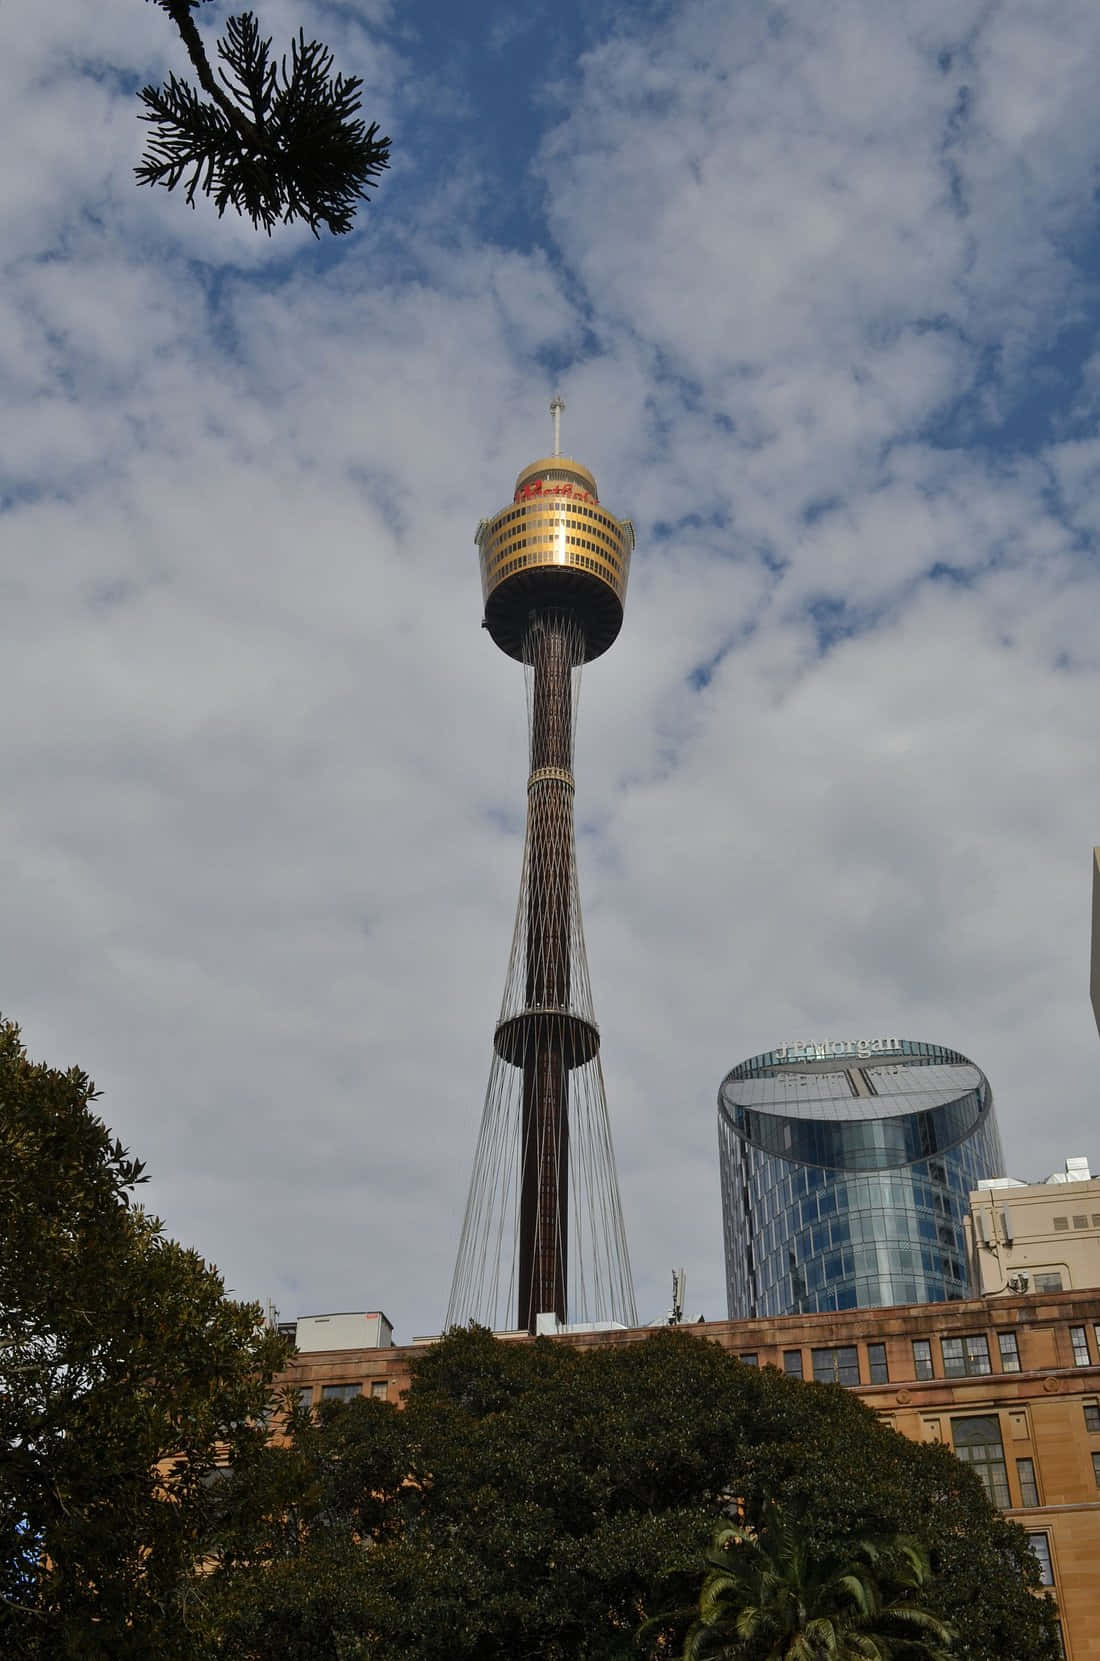 Sydney Tower Eye Against Cloudy Sky Wallpaper